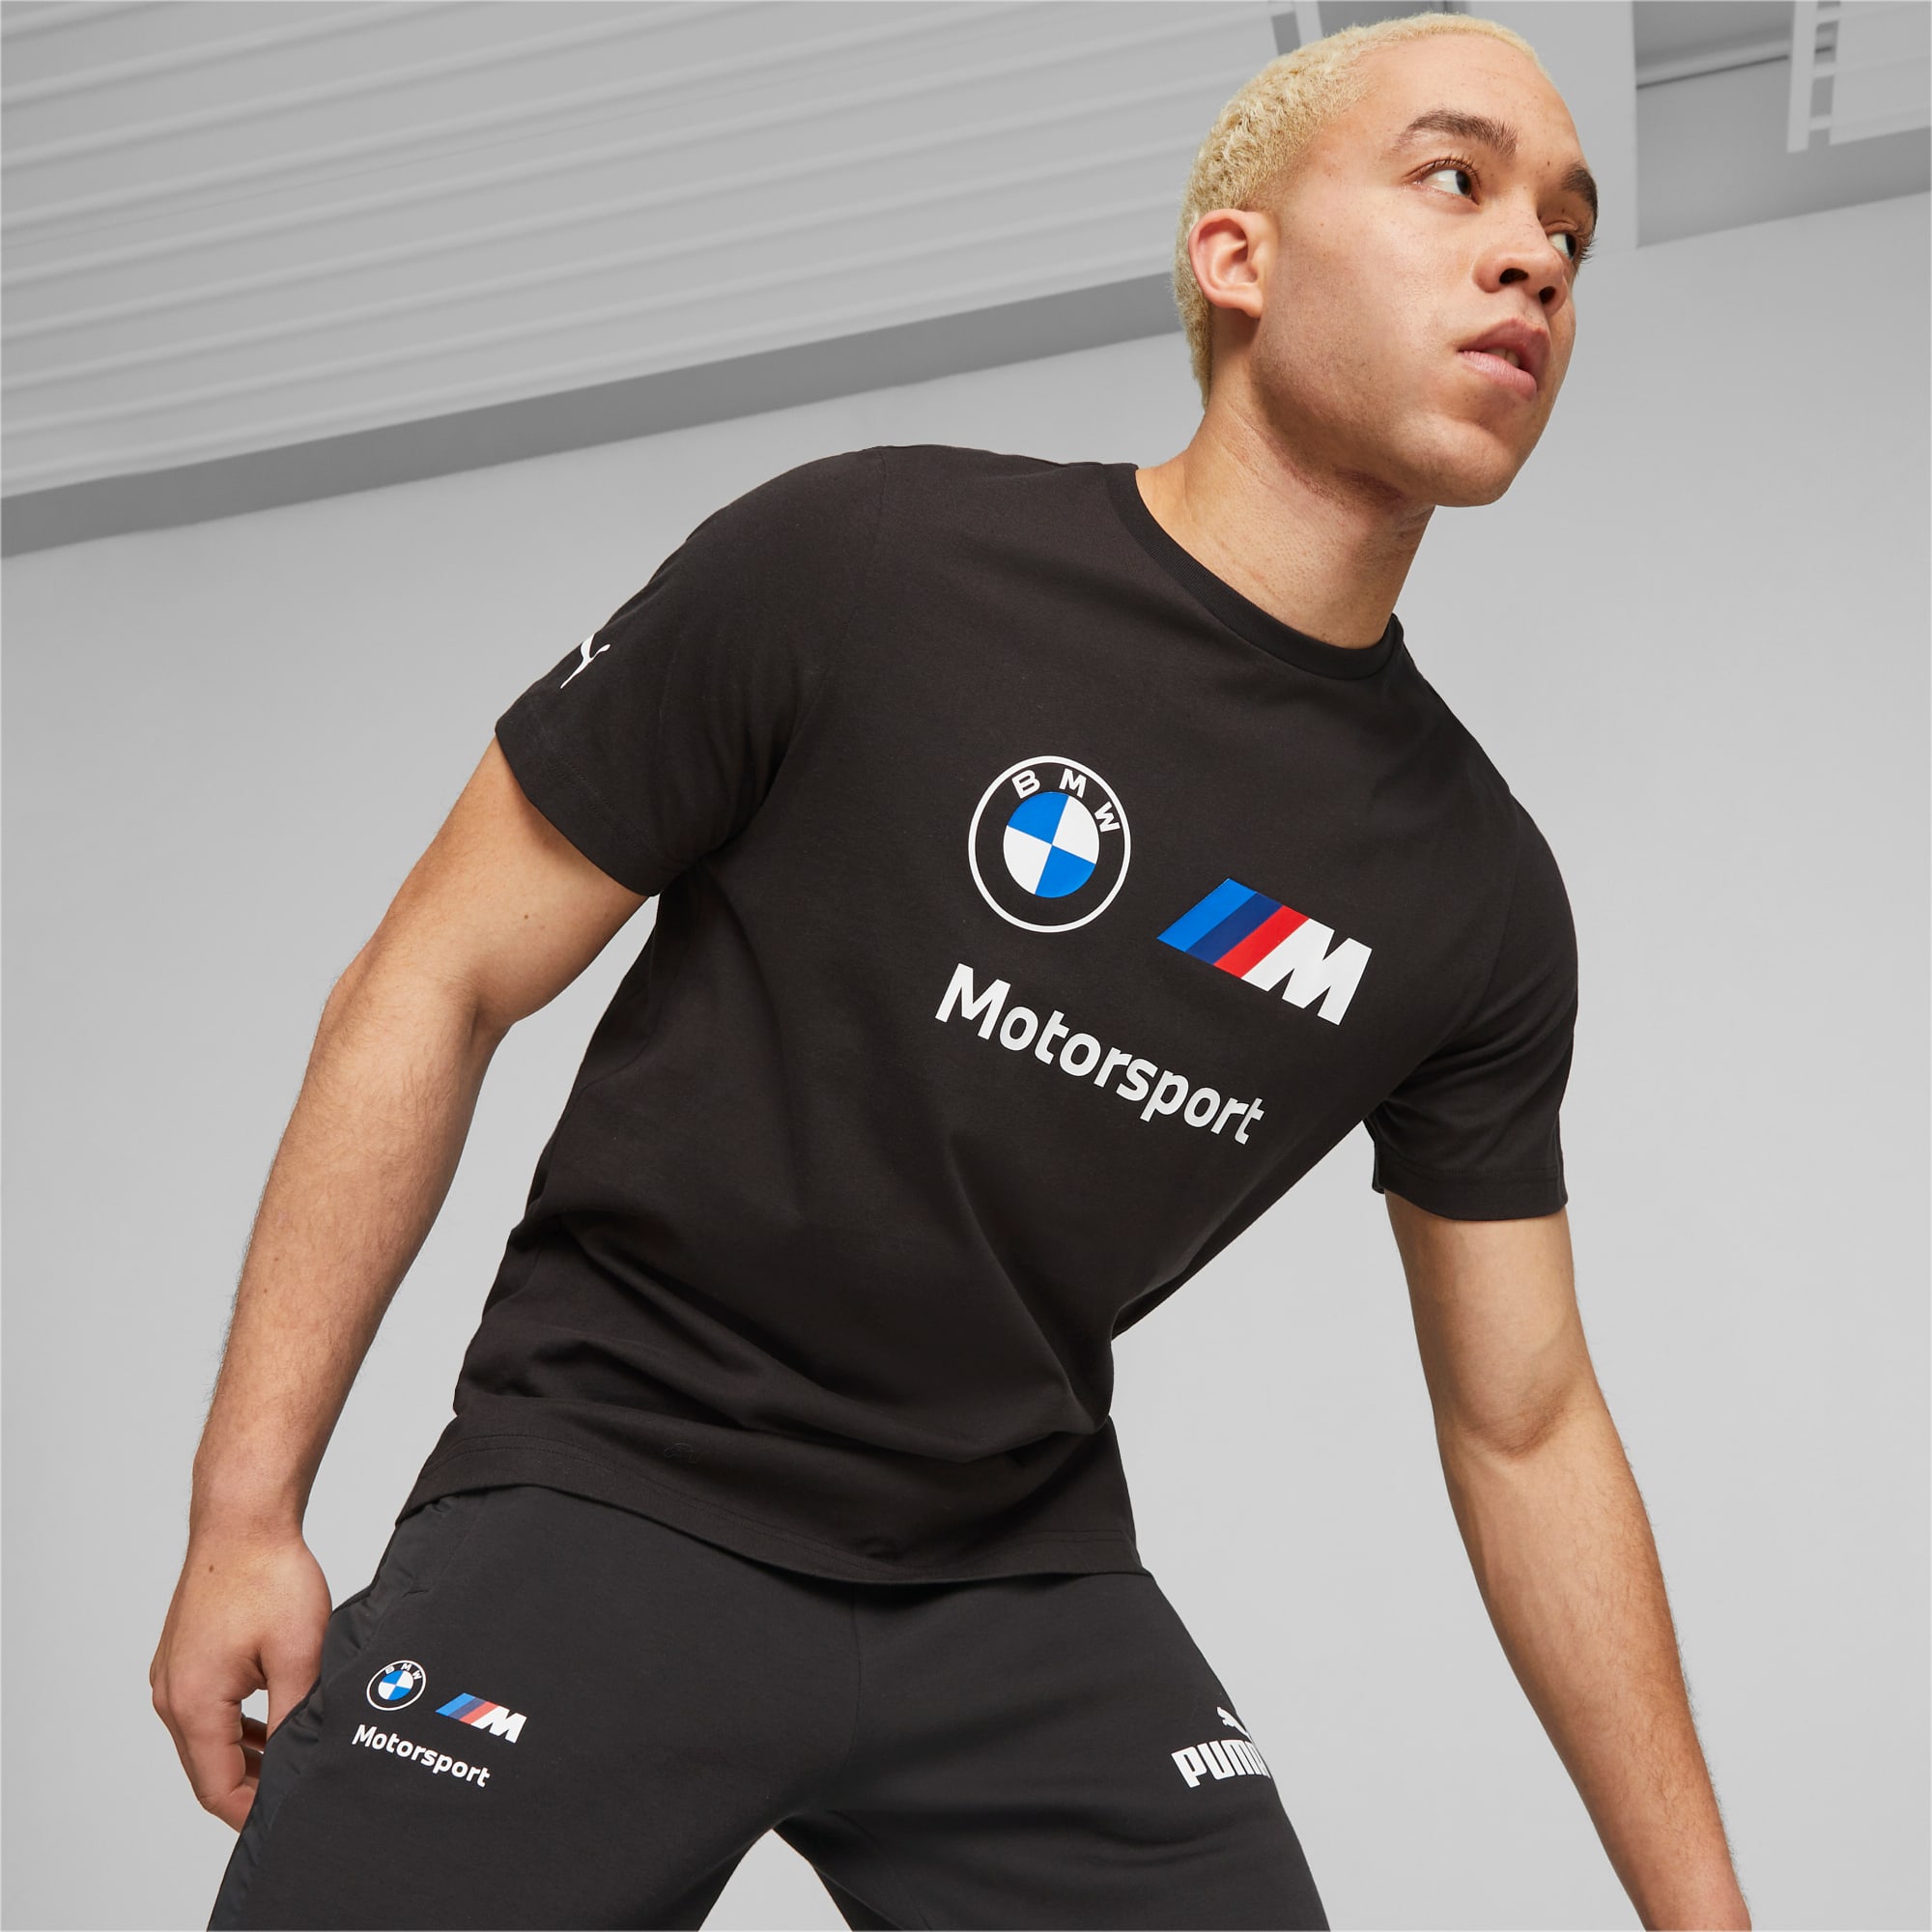 Camiseta con logotipo BMW M Motorsport ESS